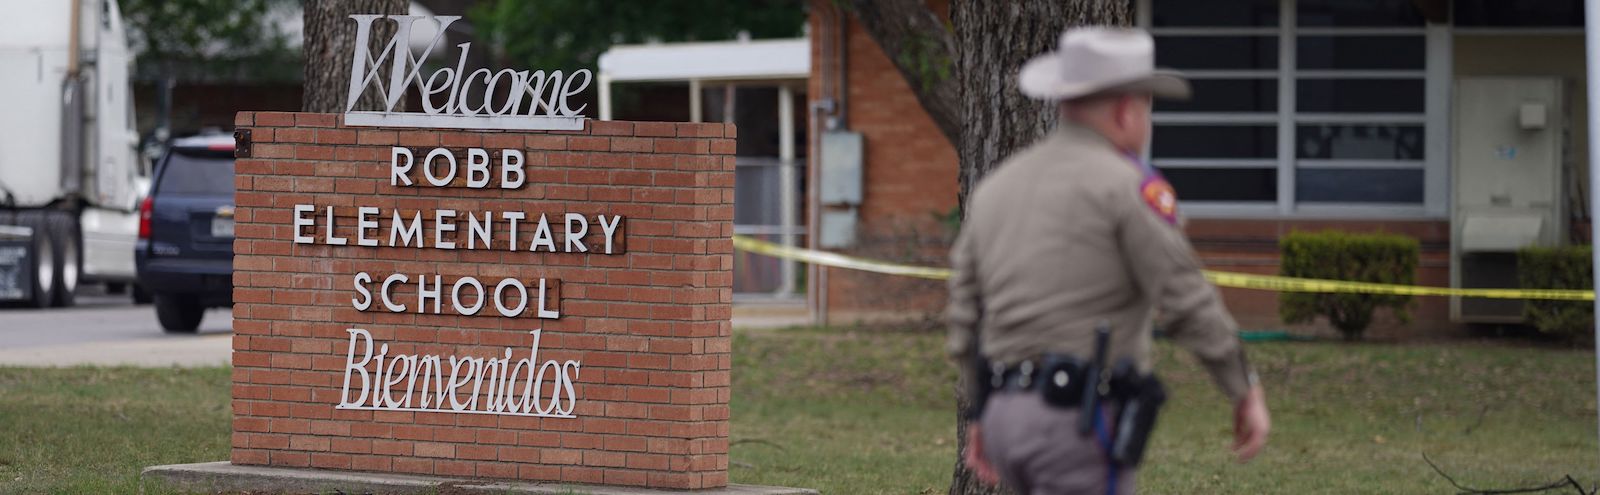 Texas Elementary School Shooting 2022